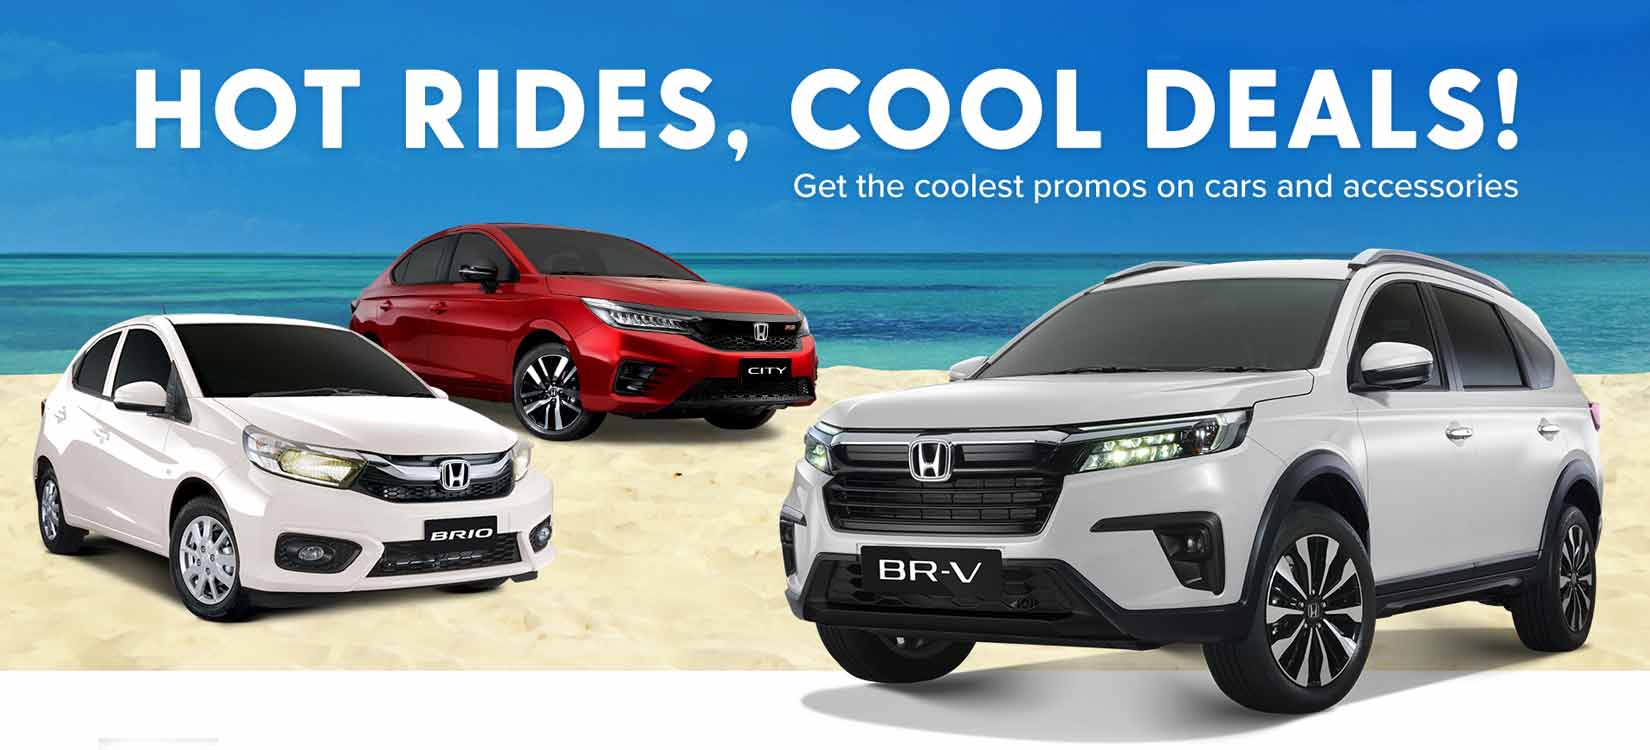 Honda Cars kicks off April with Hot Rides Cool Deals promo and HEAT program